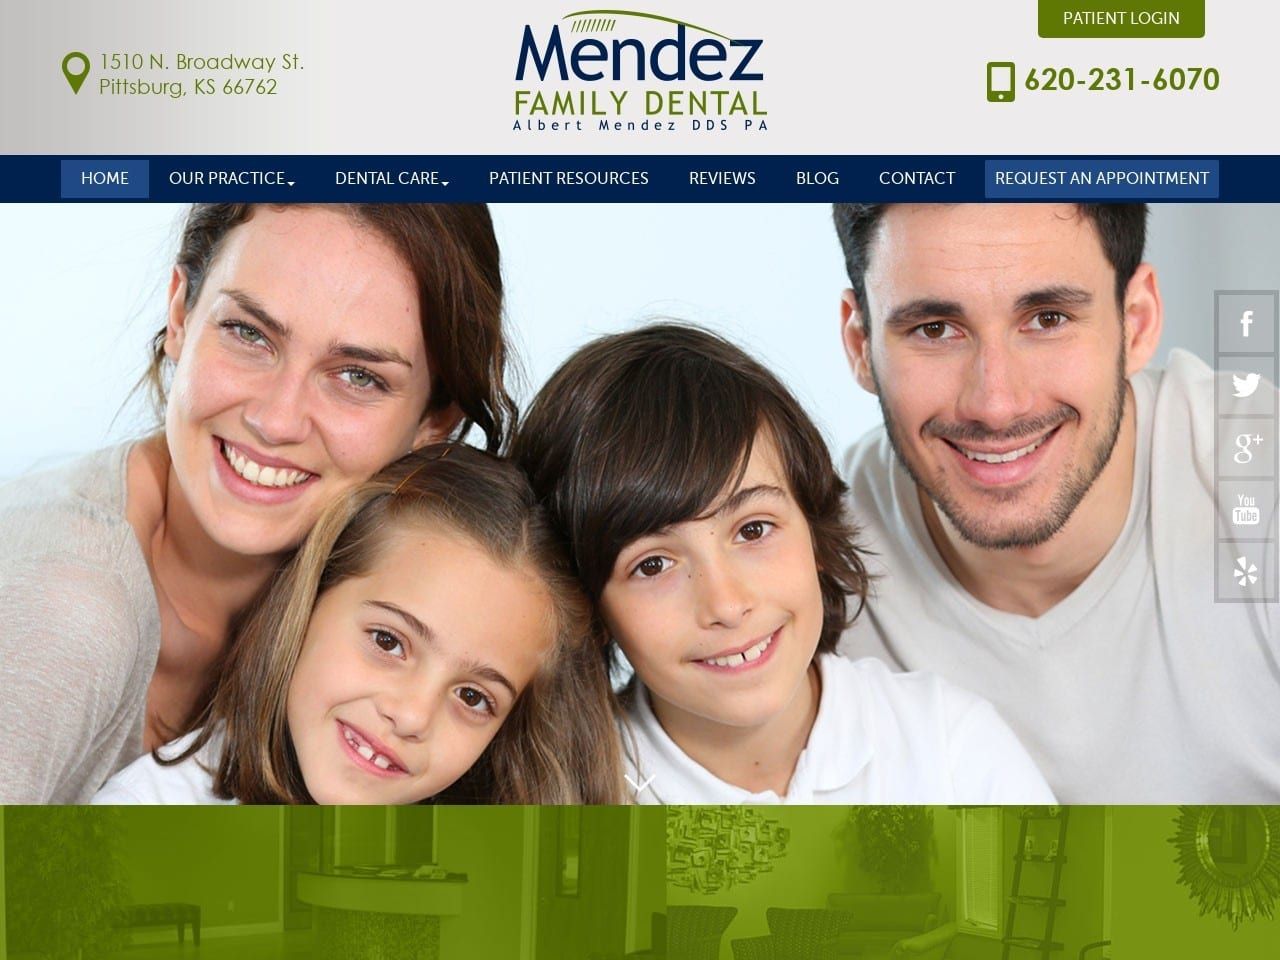 Albert Mendez DDS PA Website Screenshot from pittsburgkansasdentist.com